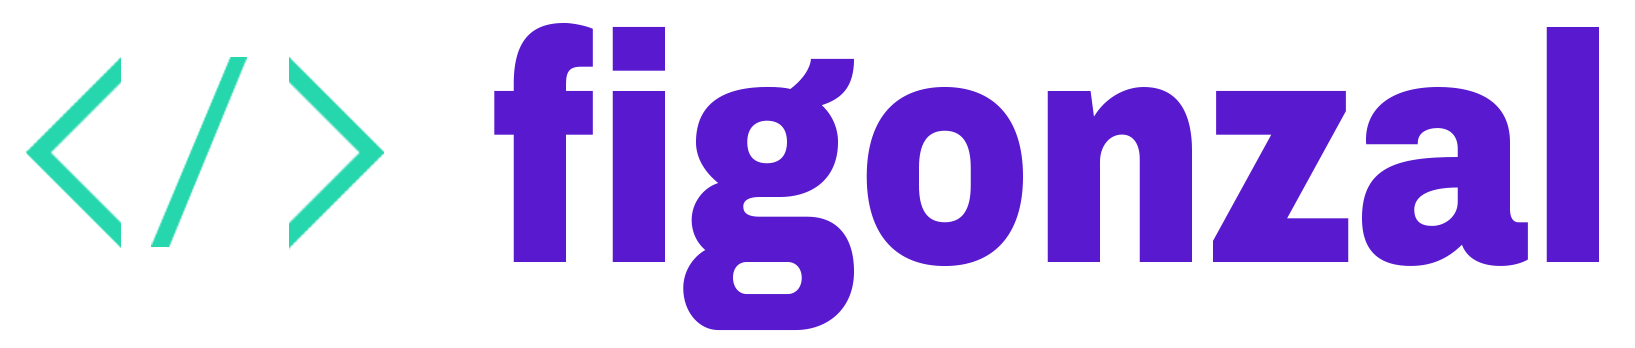 Figonzal.cl logo